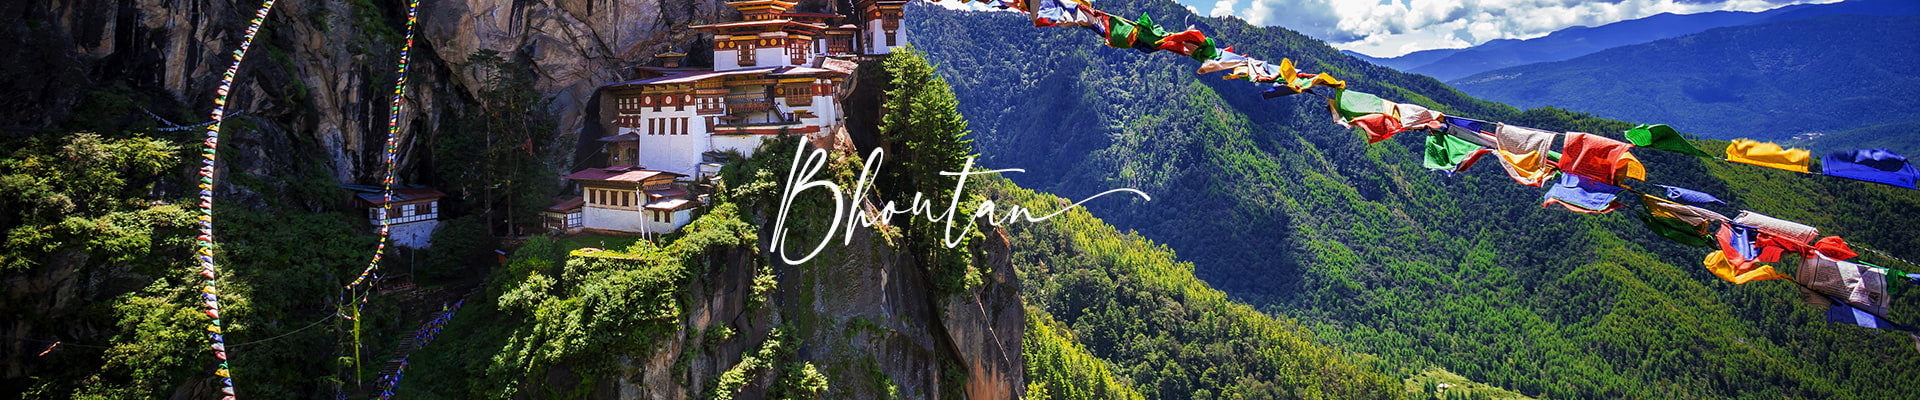 images/panos/desktop/bhoutan